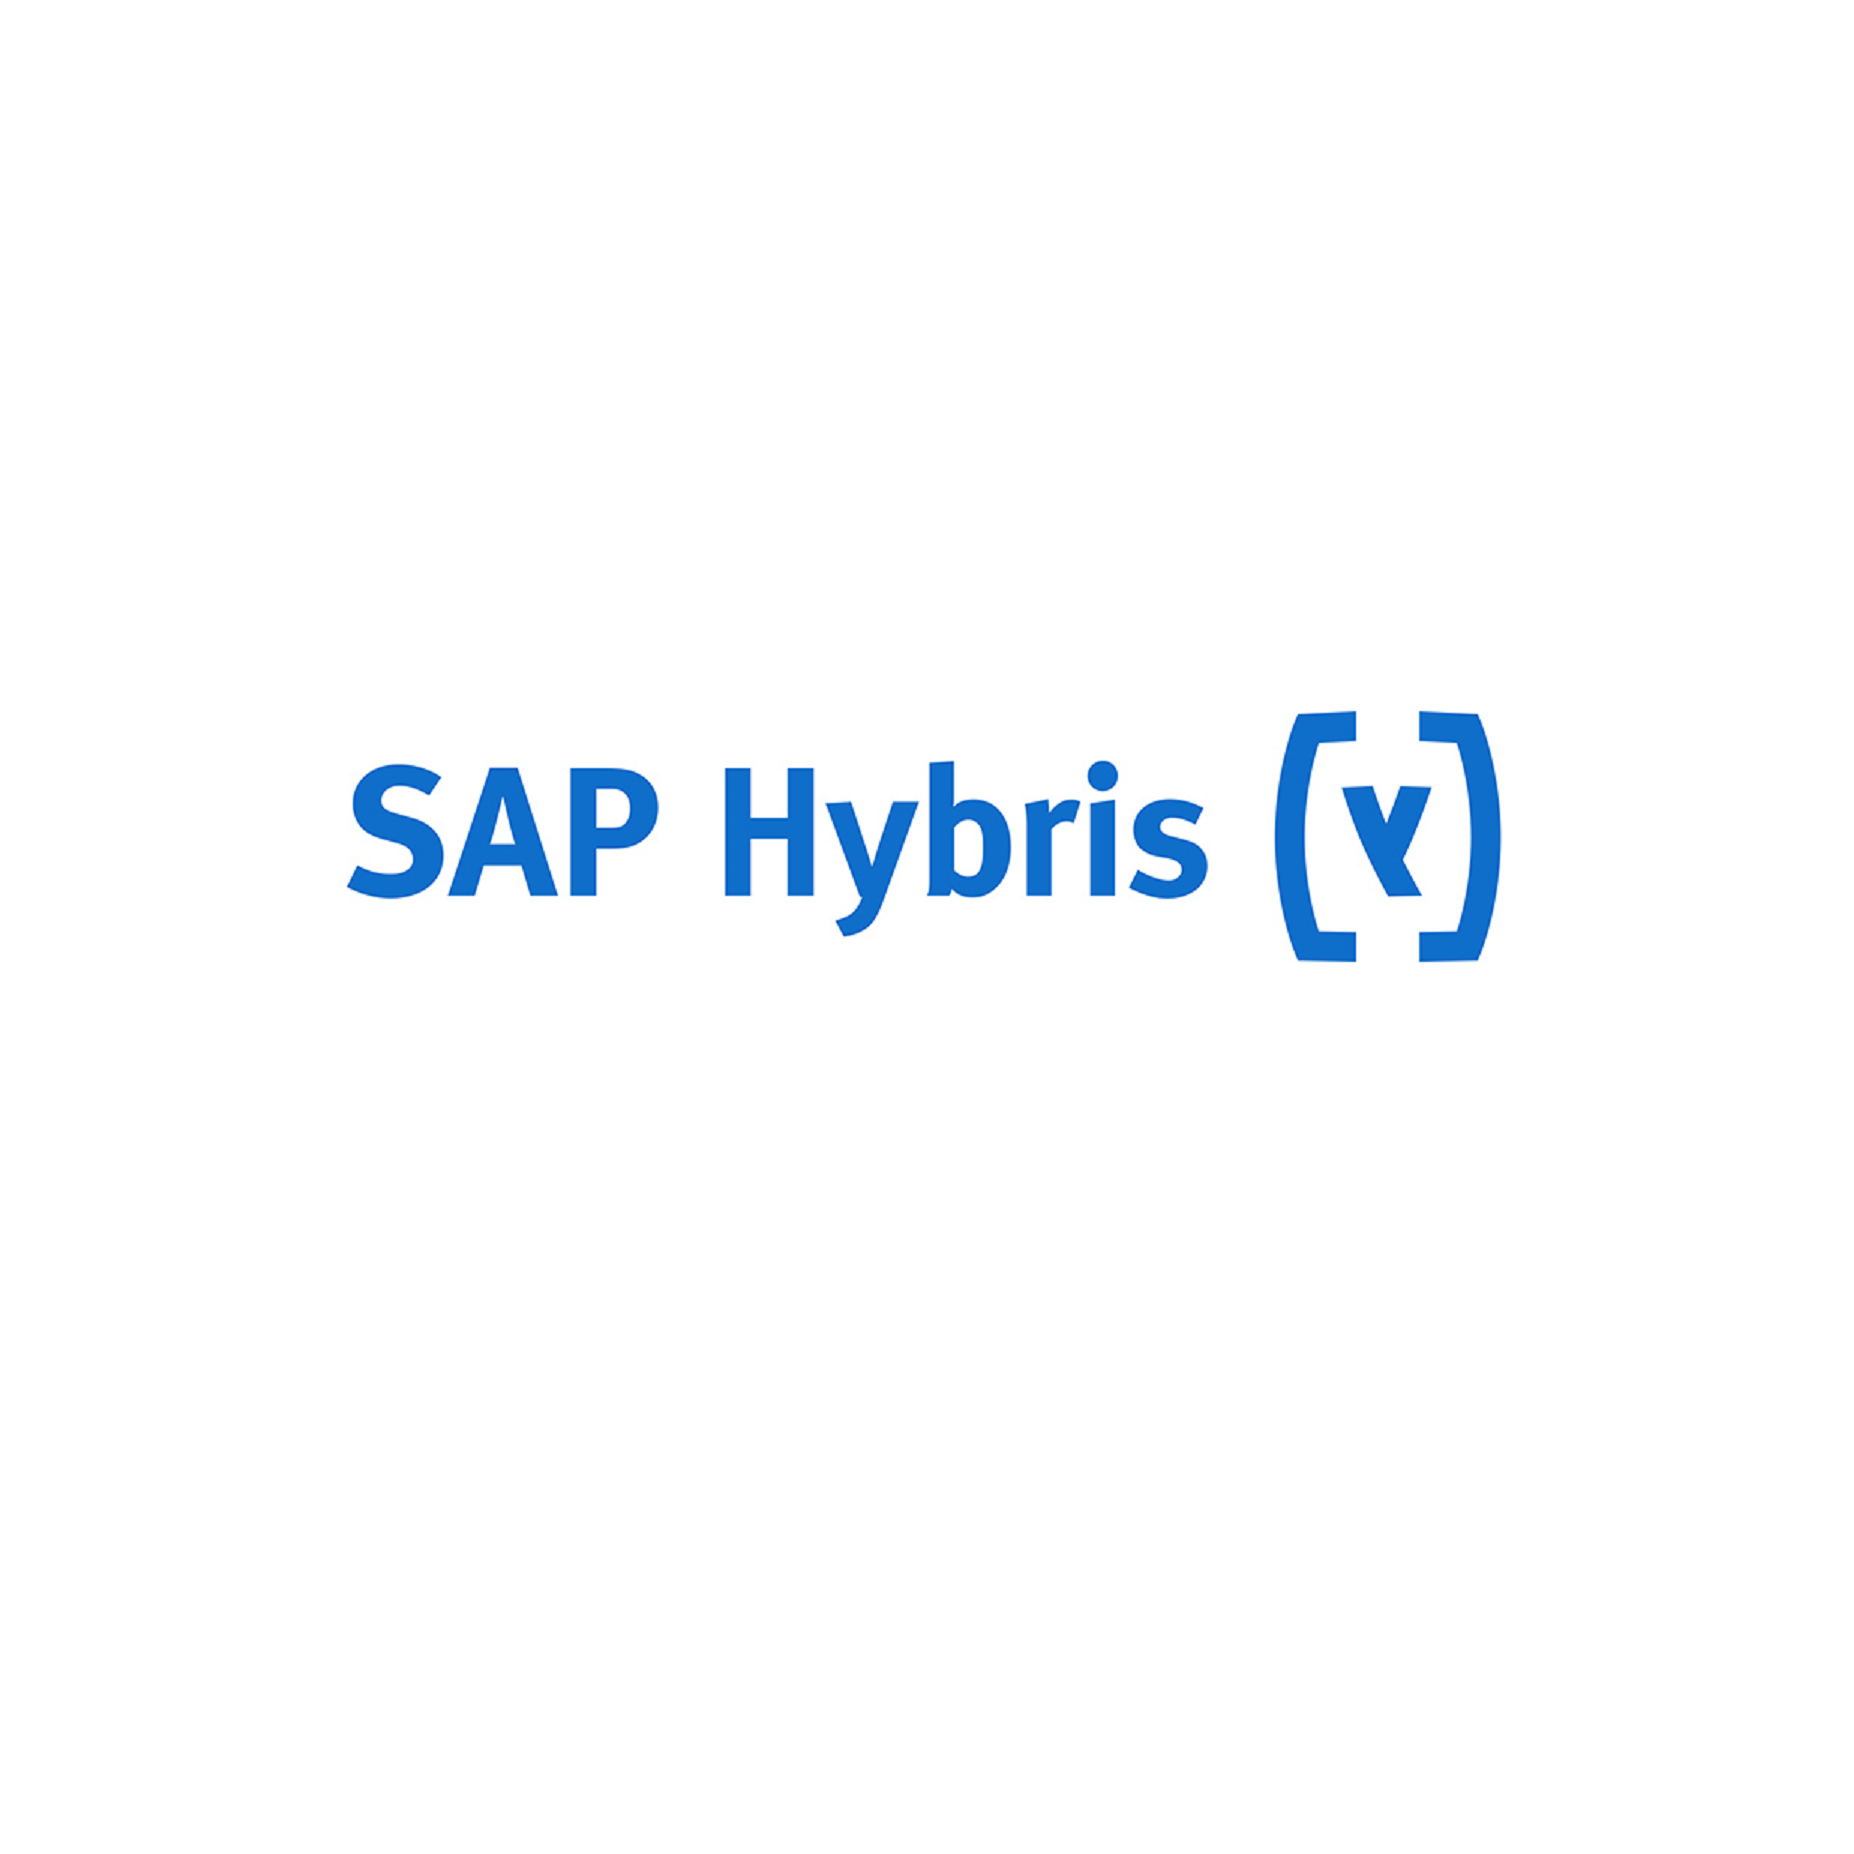 SAP Hybris